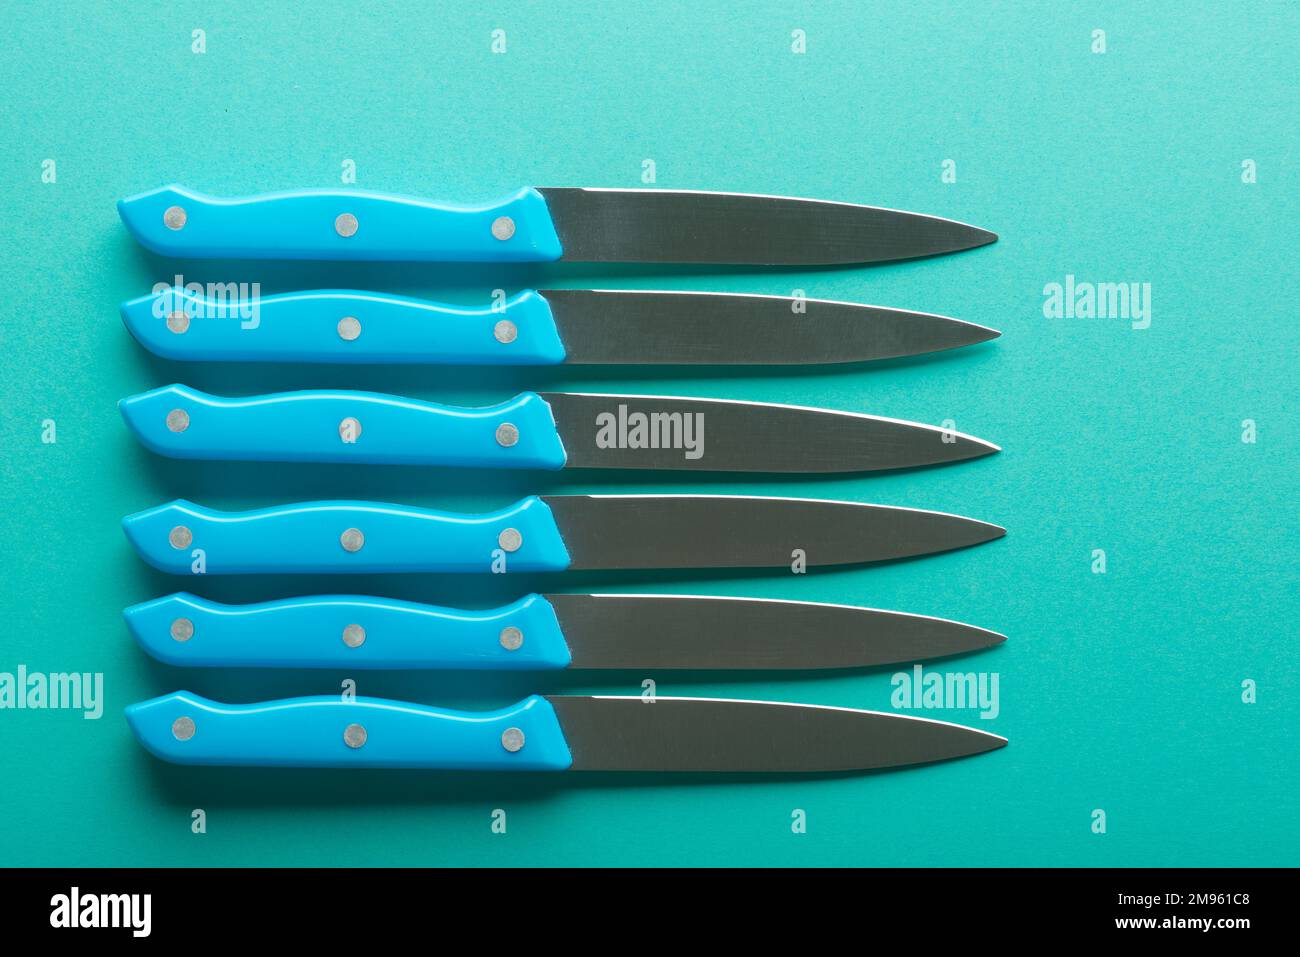 Cuchillos de cocina con mangos de plástico azul Fotografía de stock - Alamy